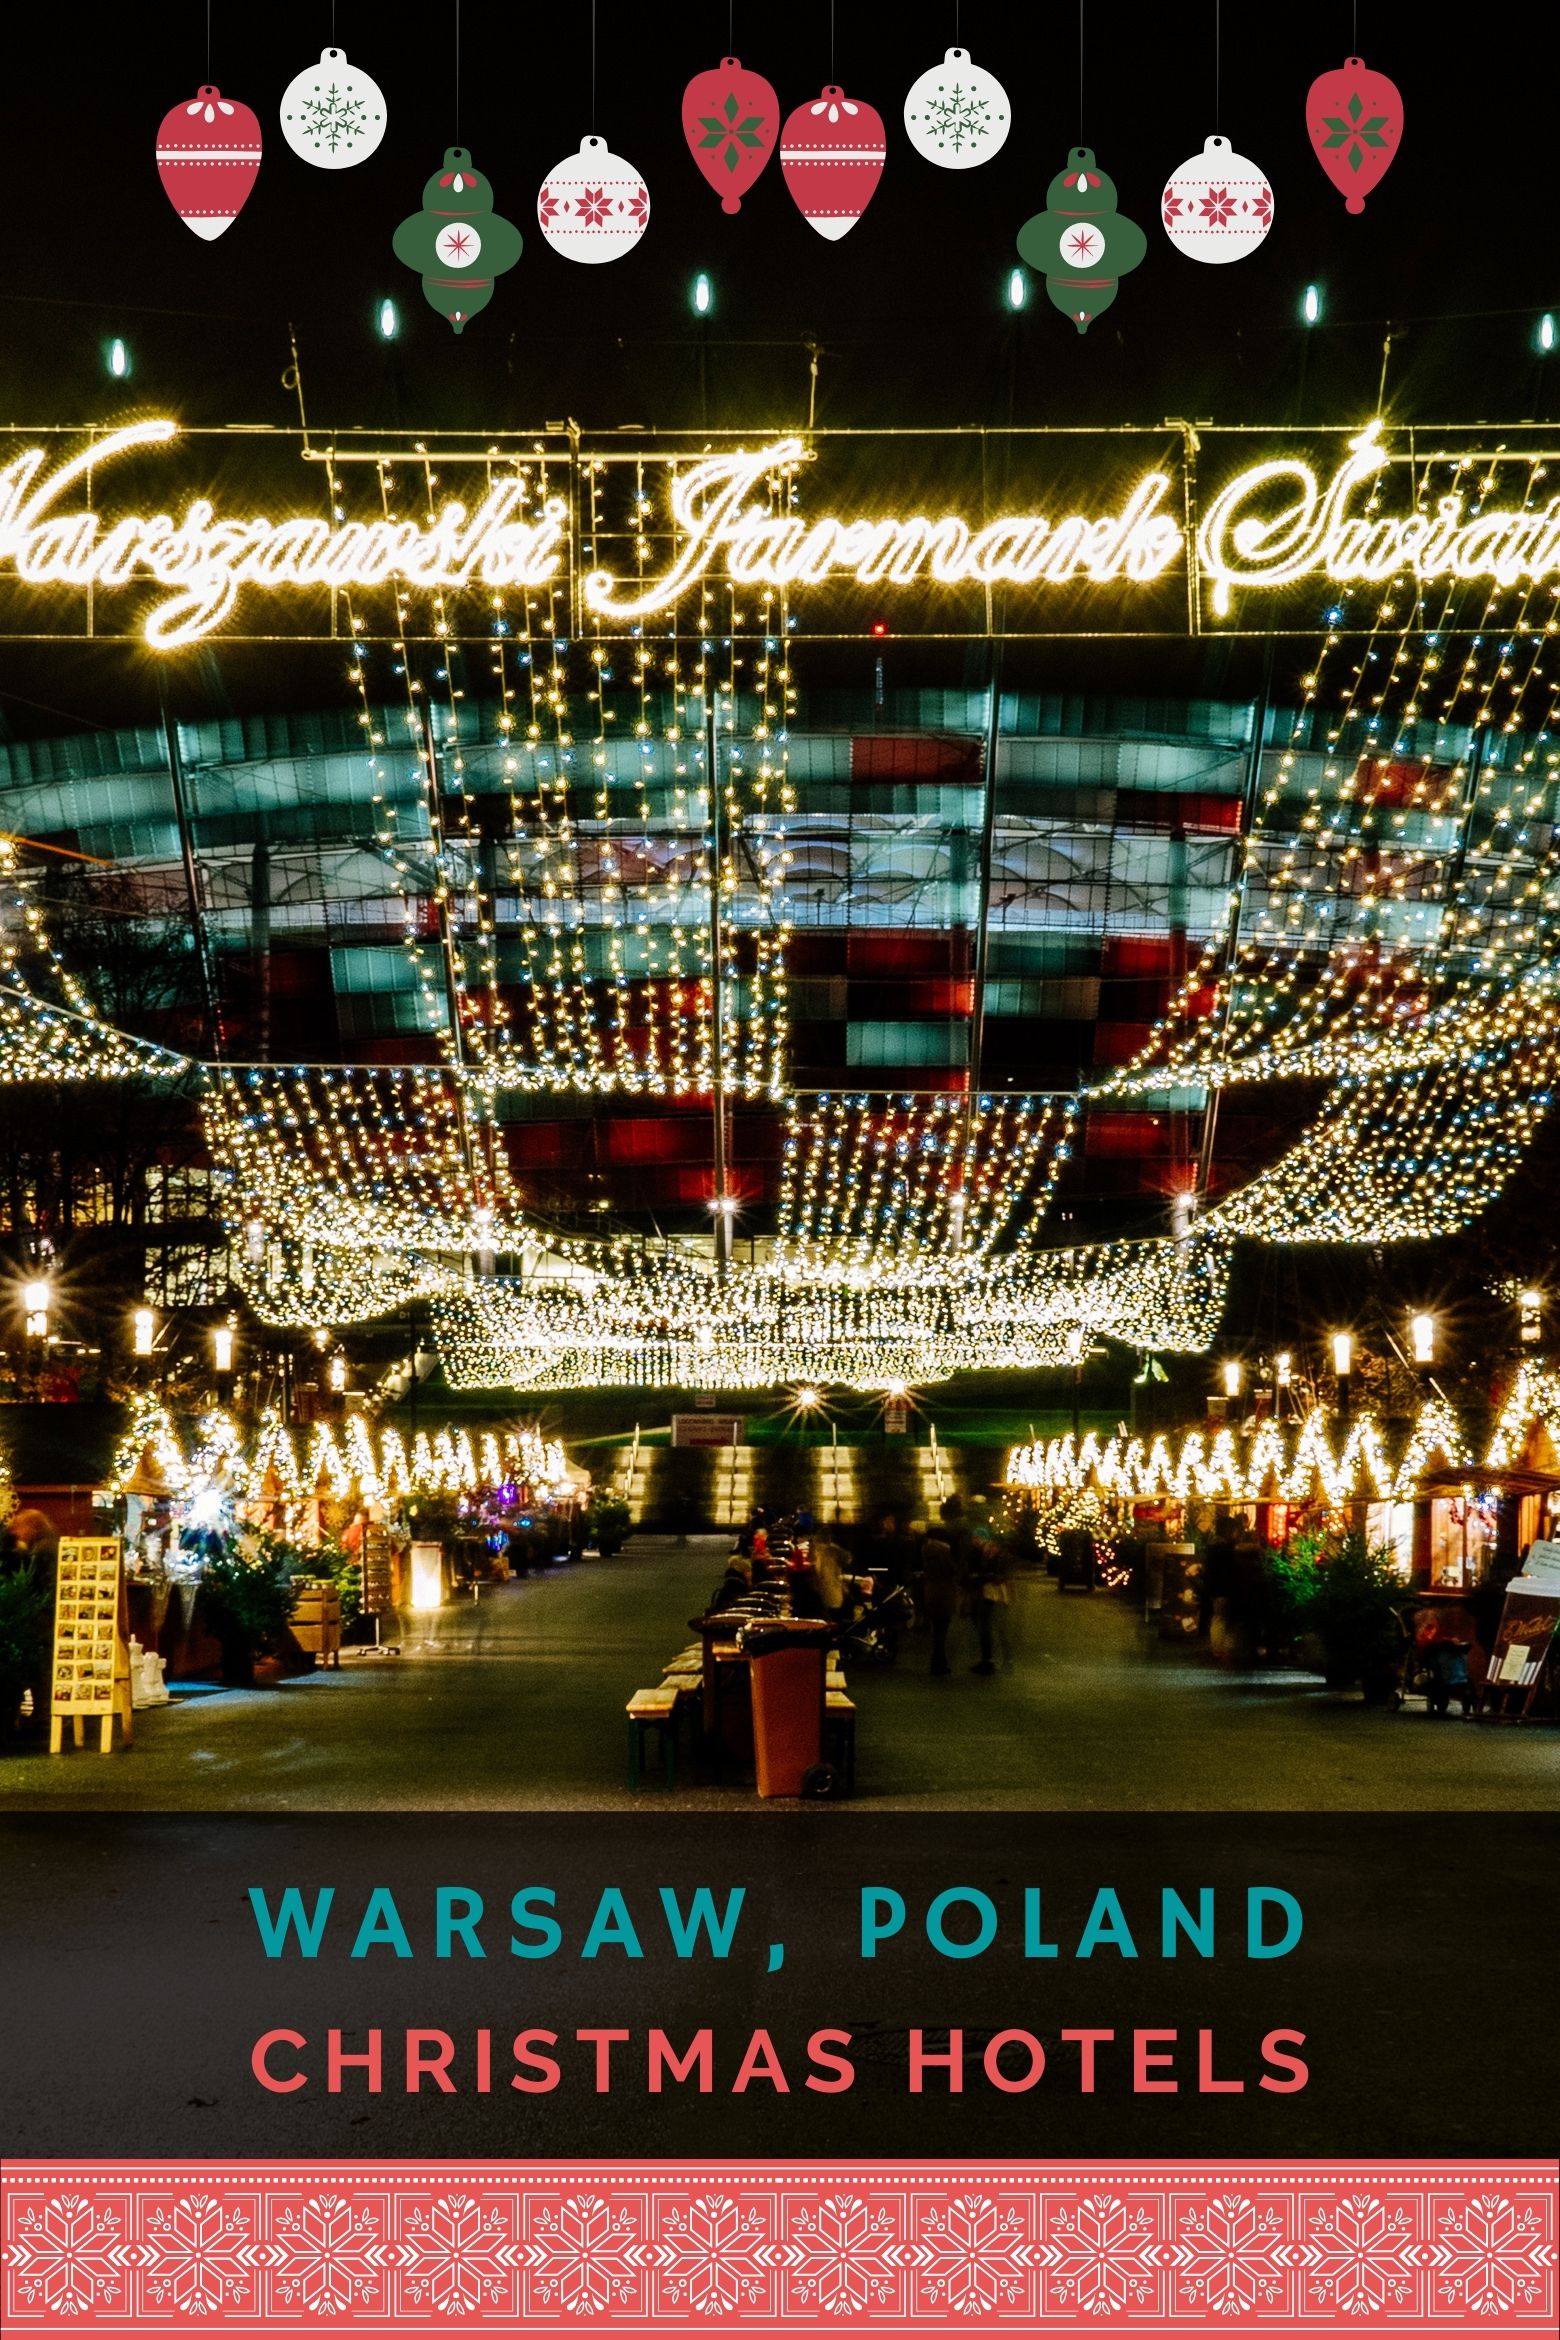 Praga Christmas market in Warsaw, Poland